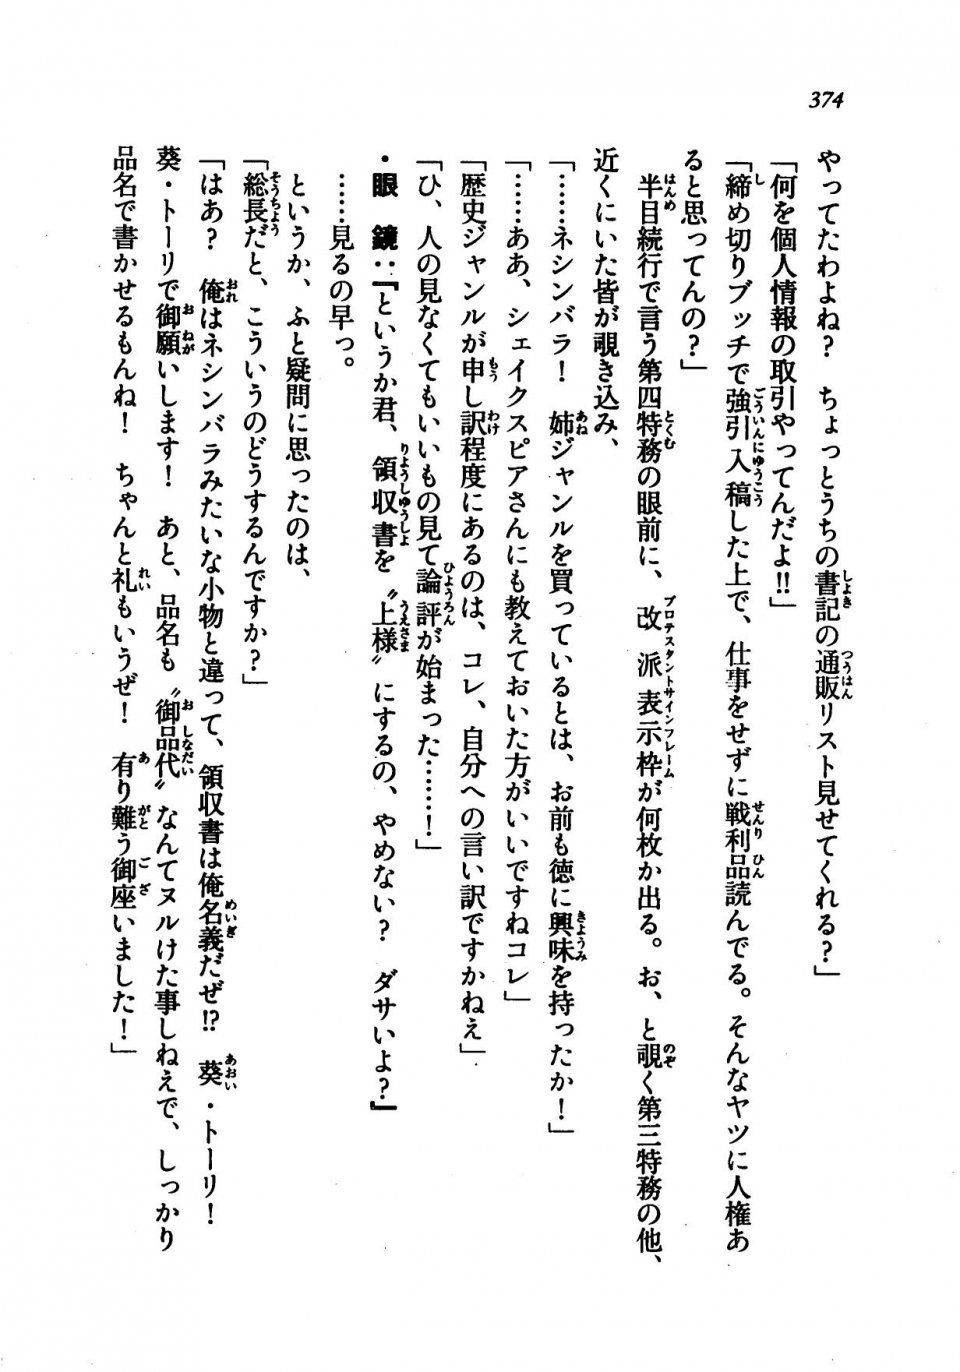 Kyoukai Senjou no Horizon LN Vol 21(8C) Part 1 - Photo #373